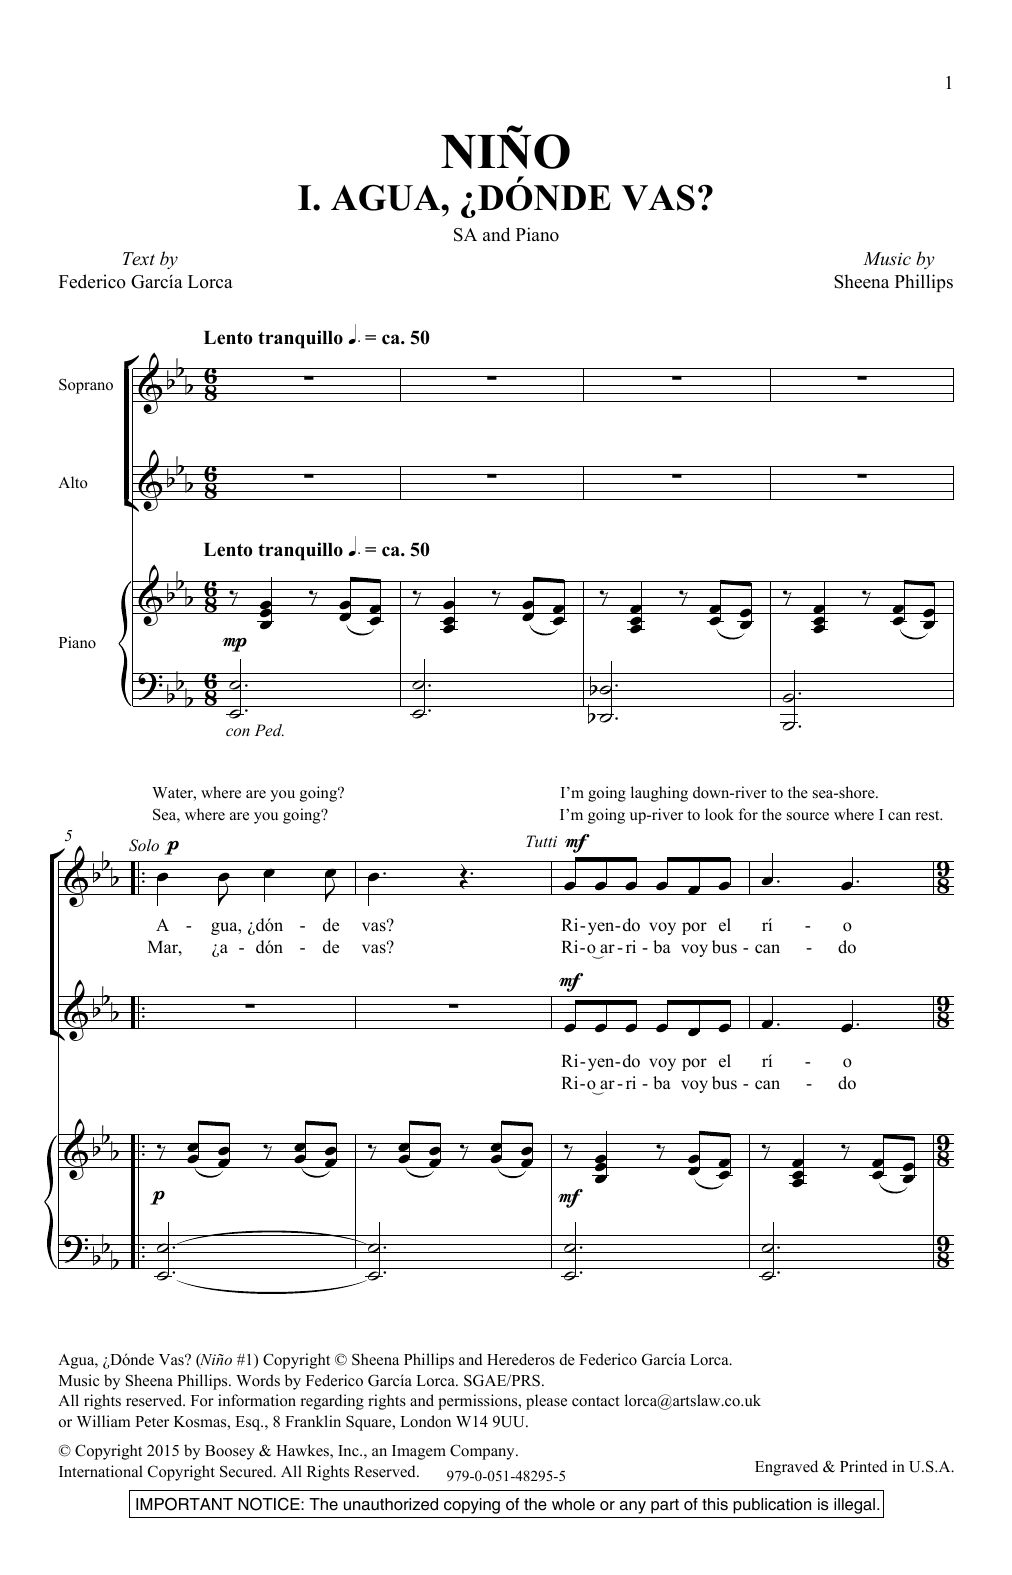 Sheena Phillips Nino (Boy) Sheet Music Notes & Chords for 2-Part Choir - Download or Print PDF